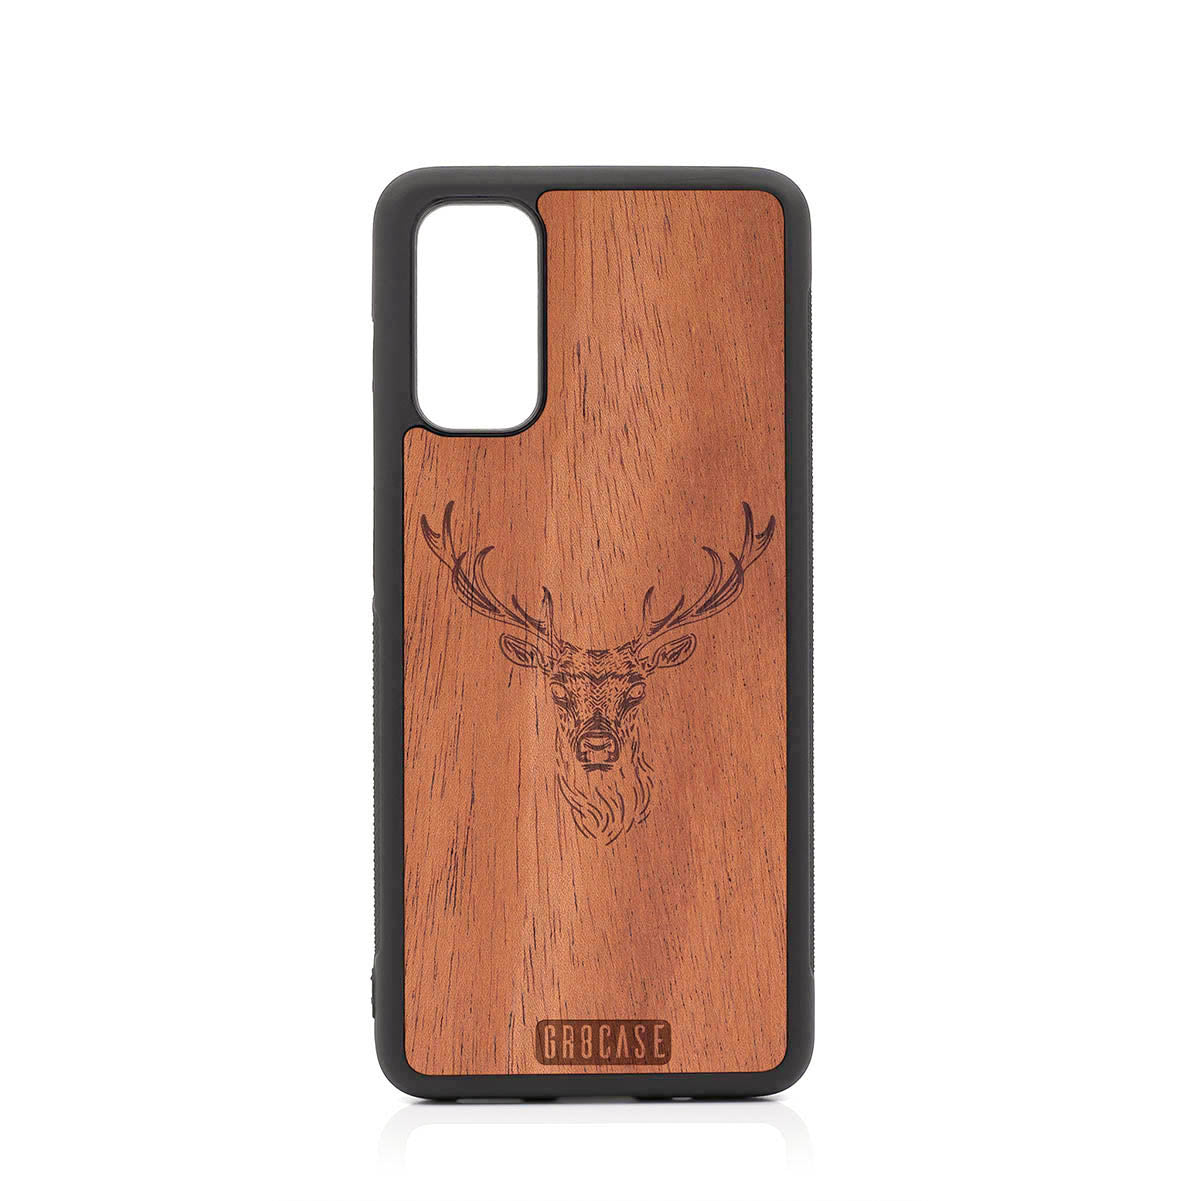 Elk Buck Design Wood Case For Samsung Galaxy S20 by GR8CASE